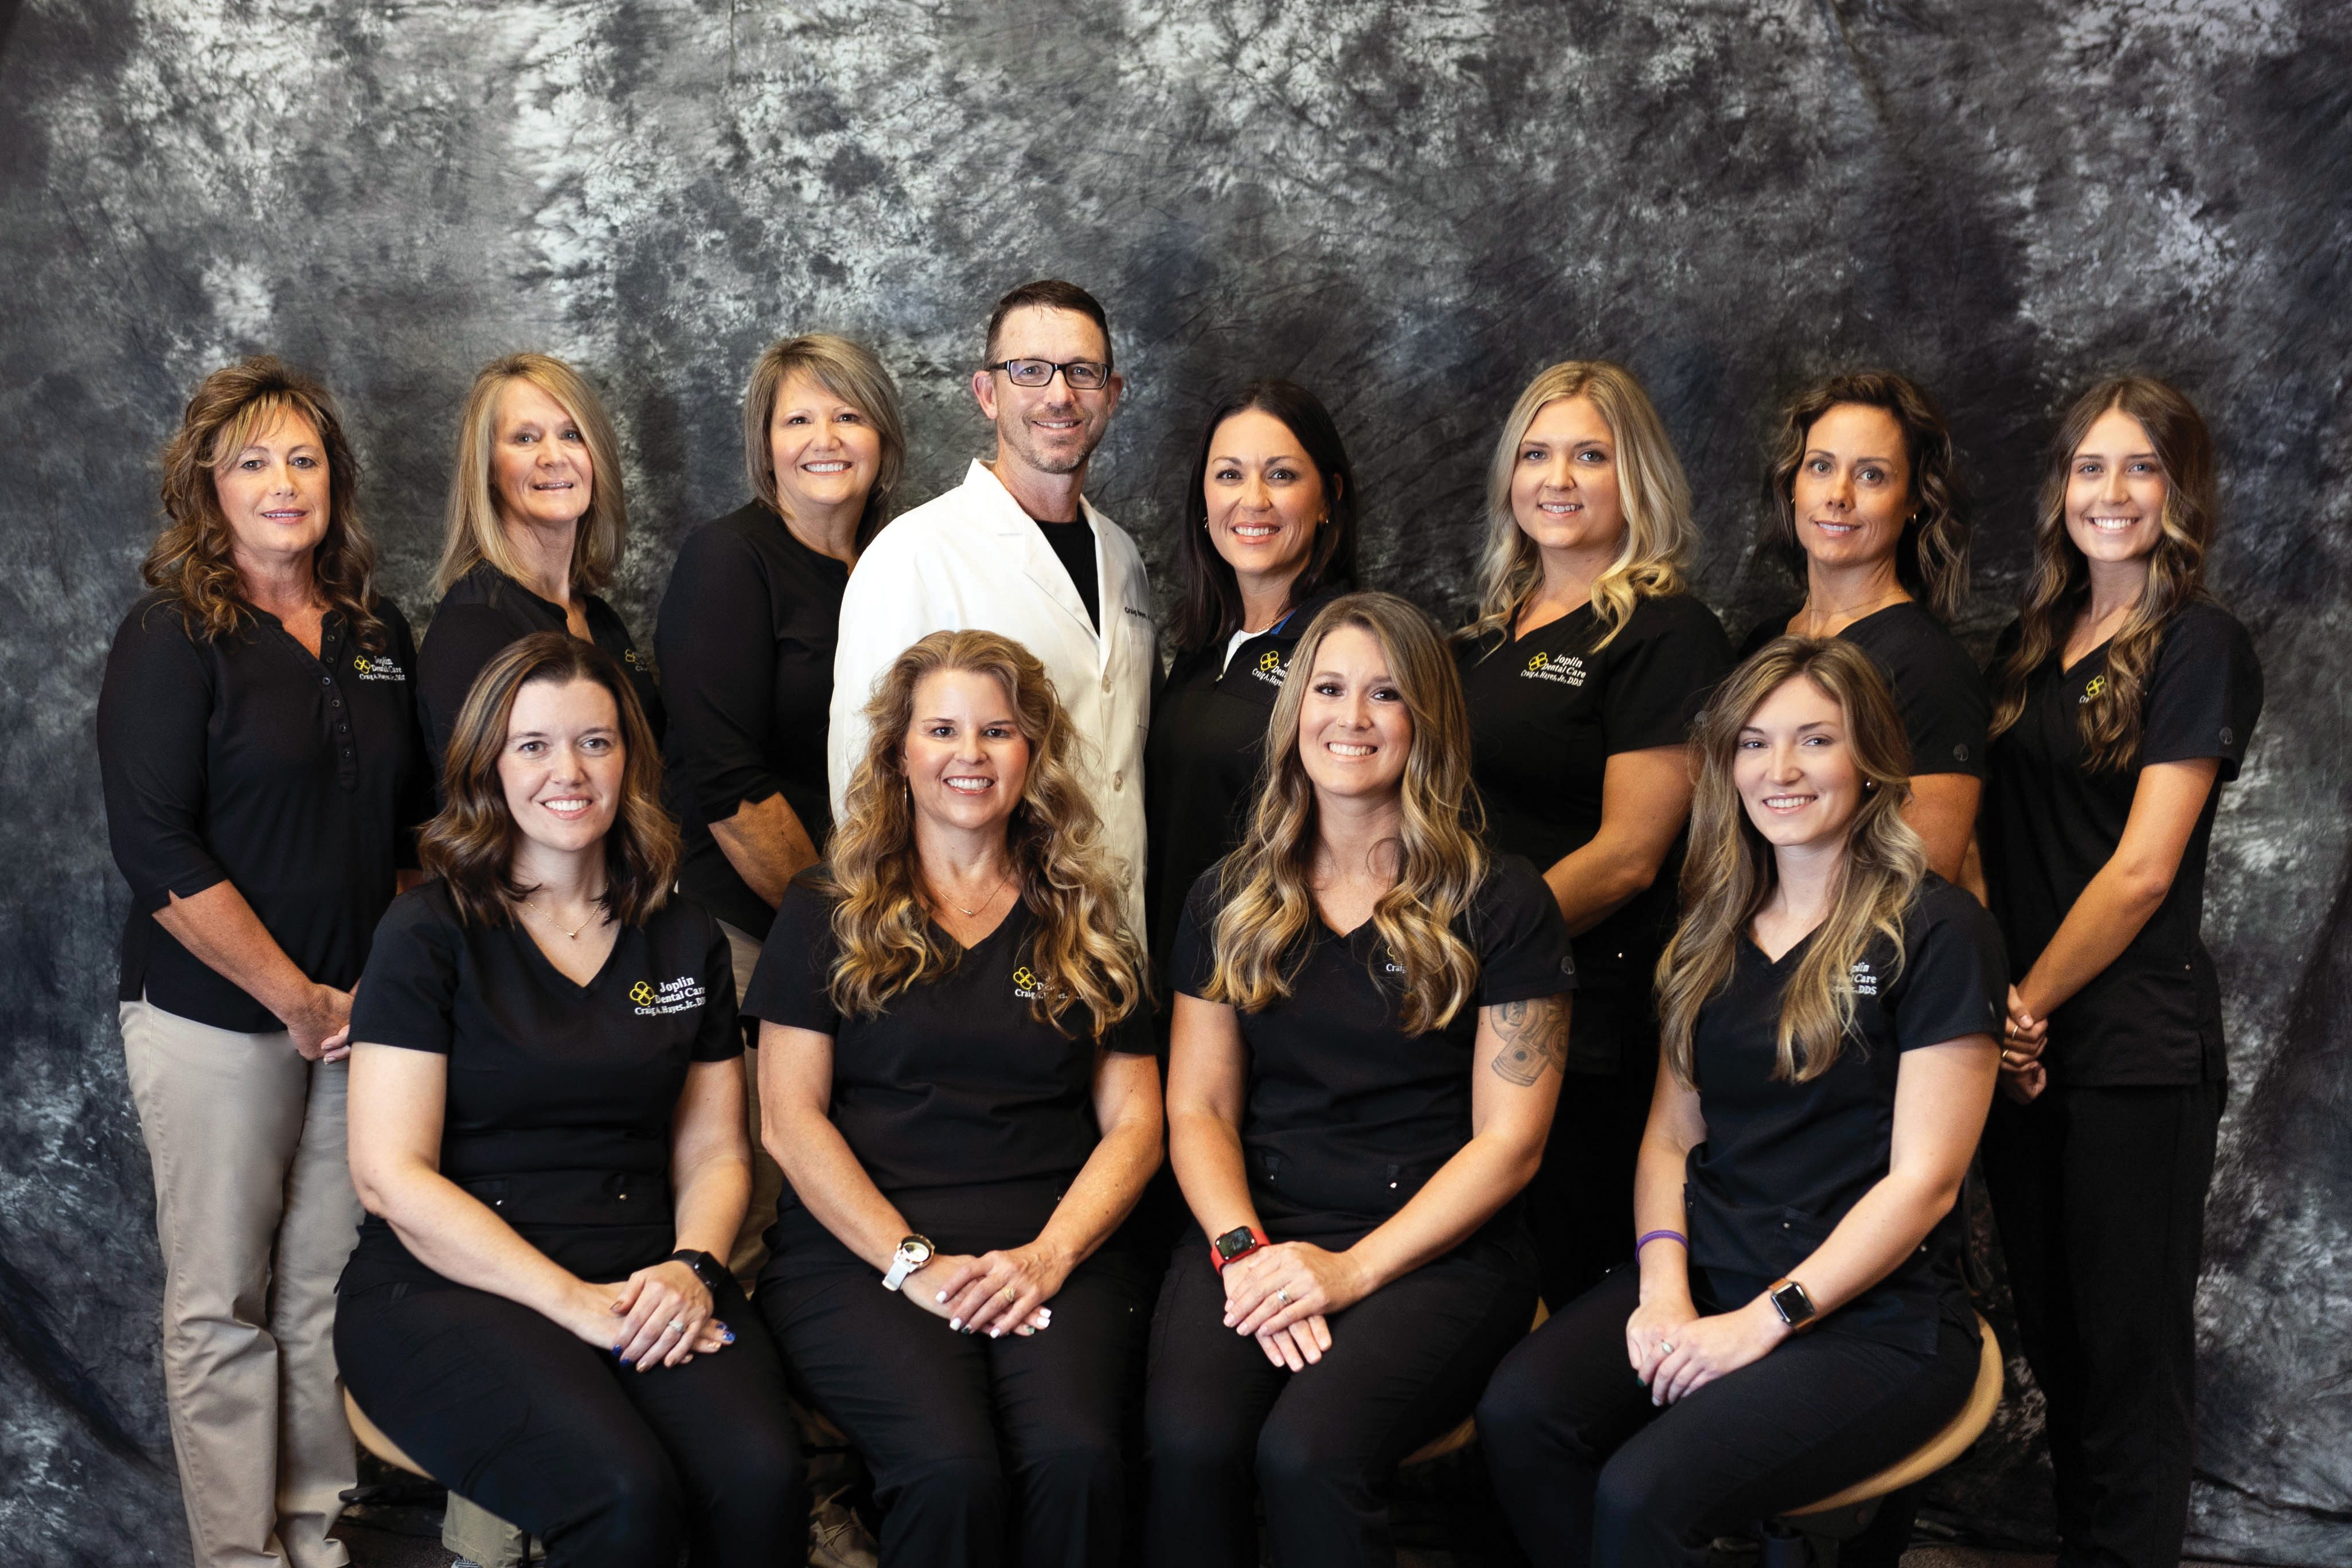 The team at Joplin Dental Care